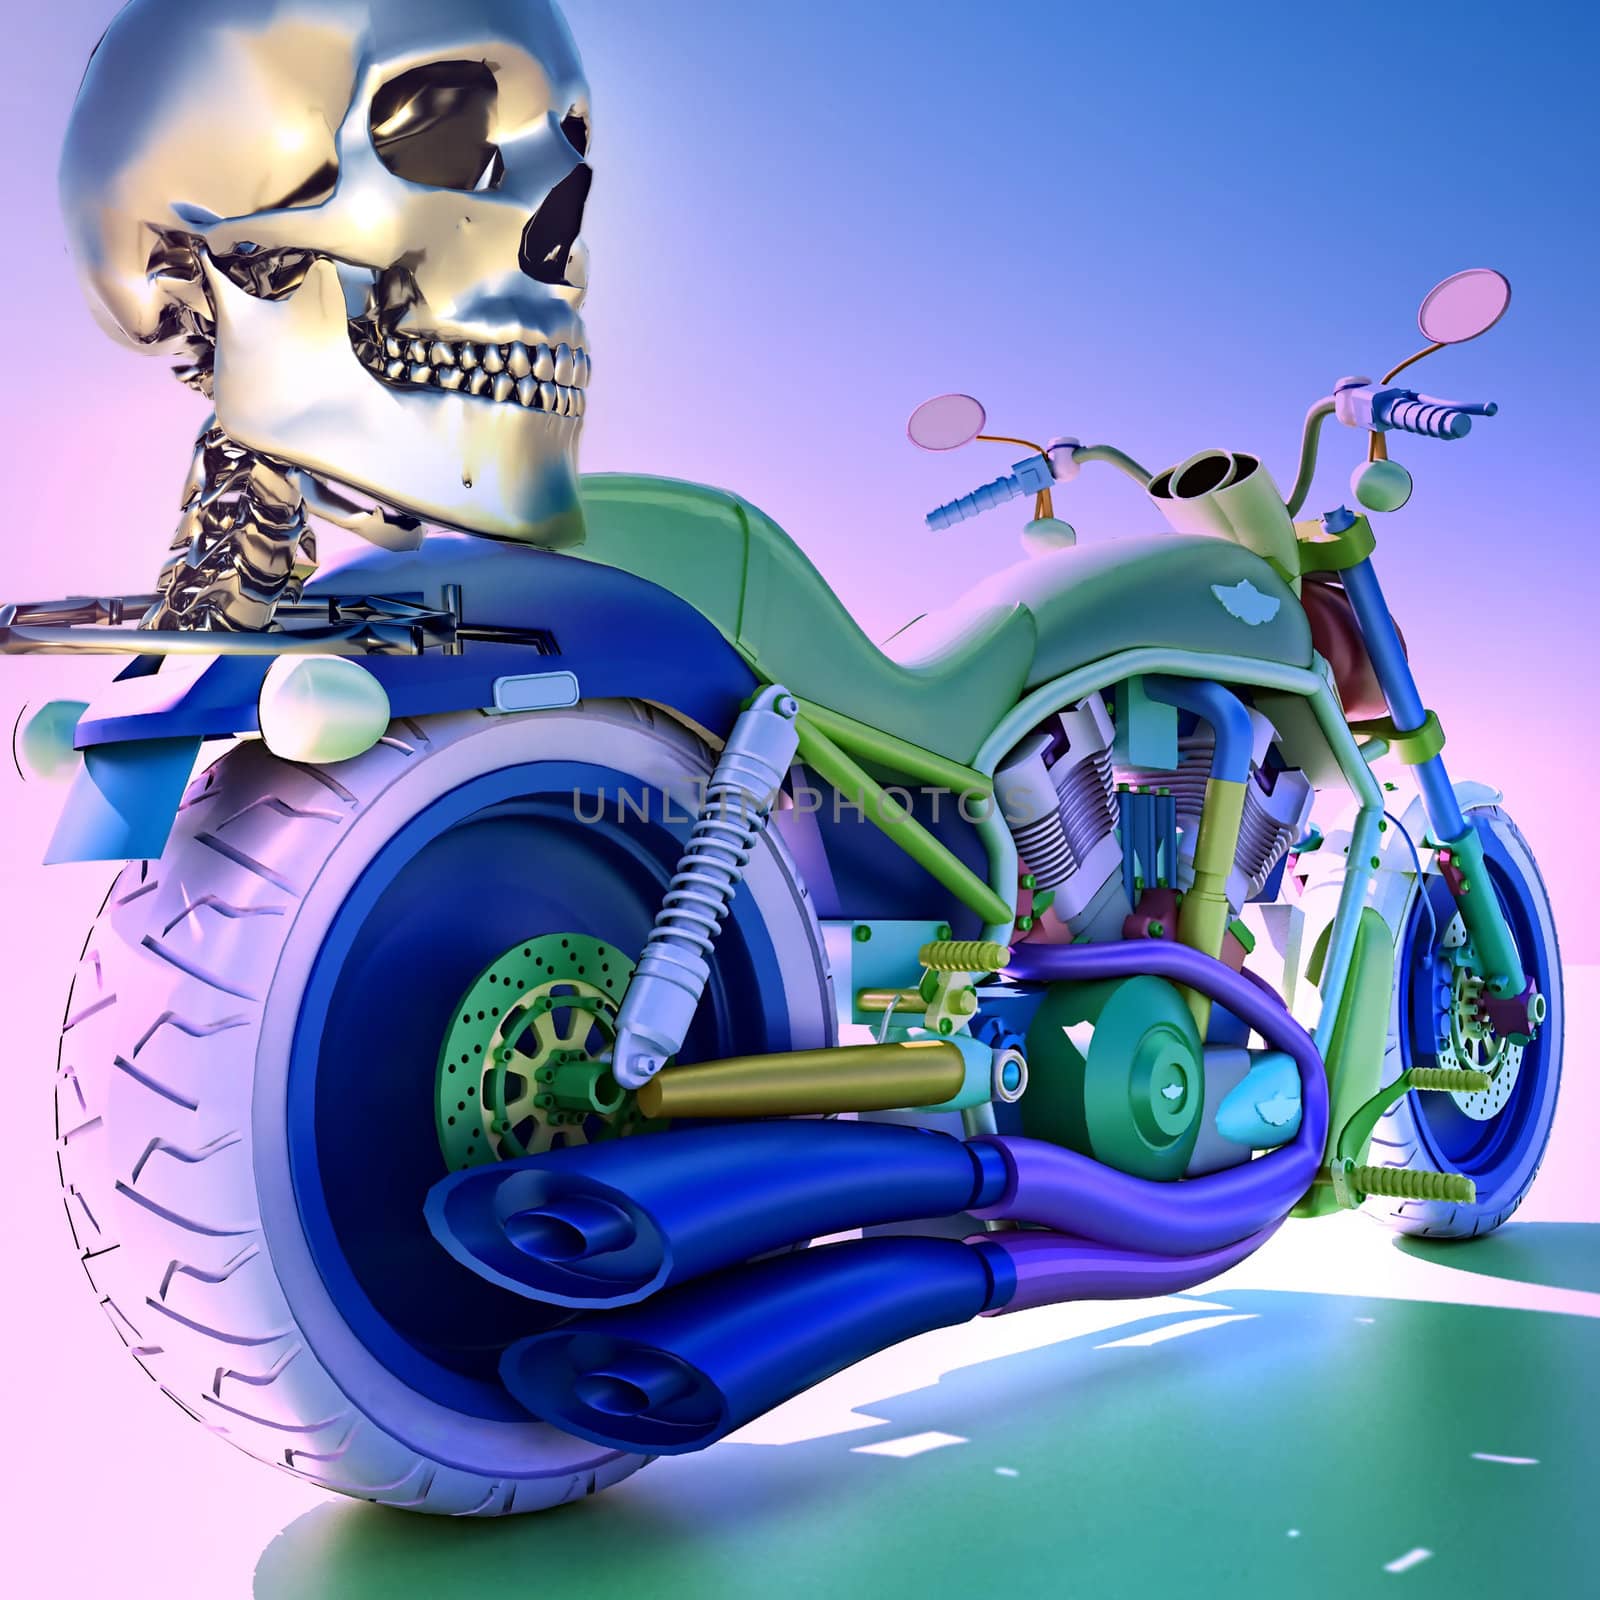 Human skleton on motorbike - abstract composition